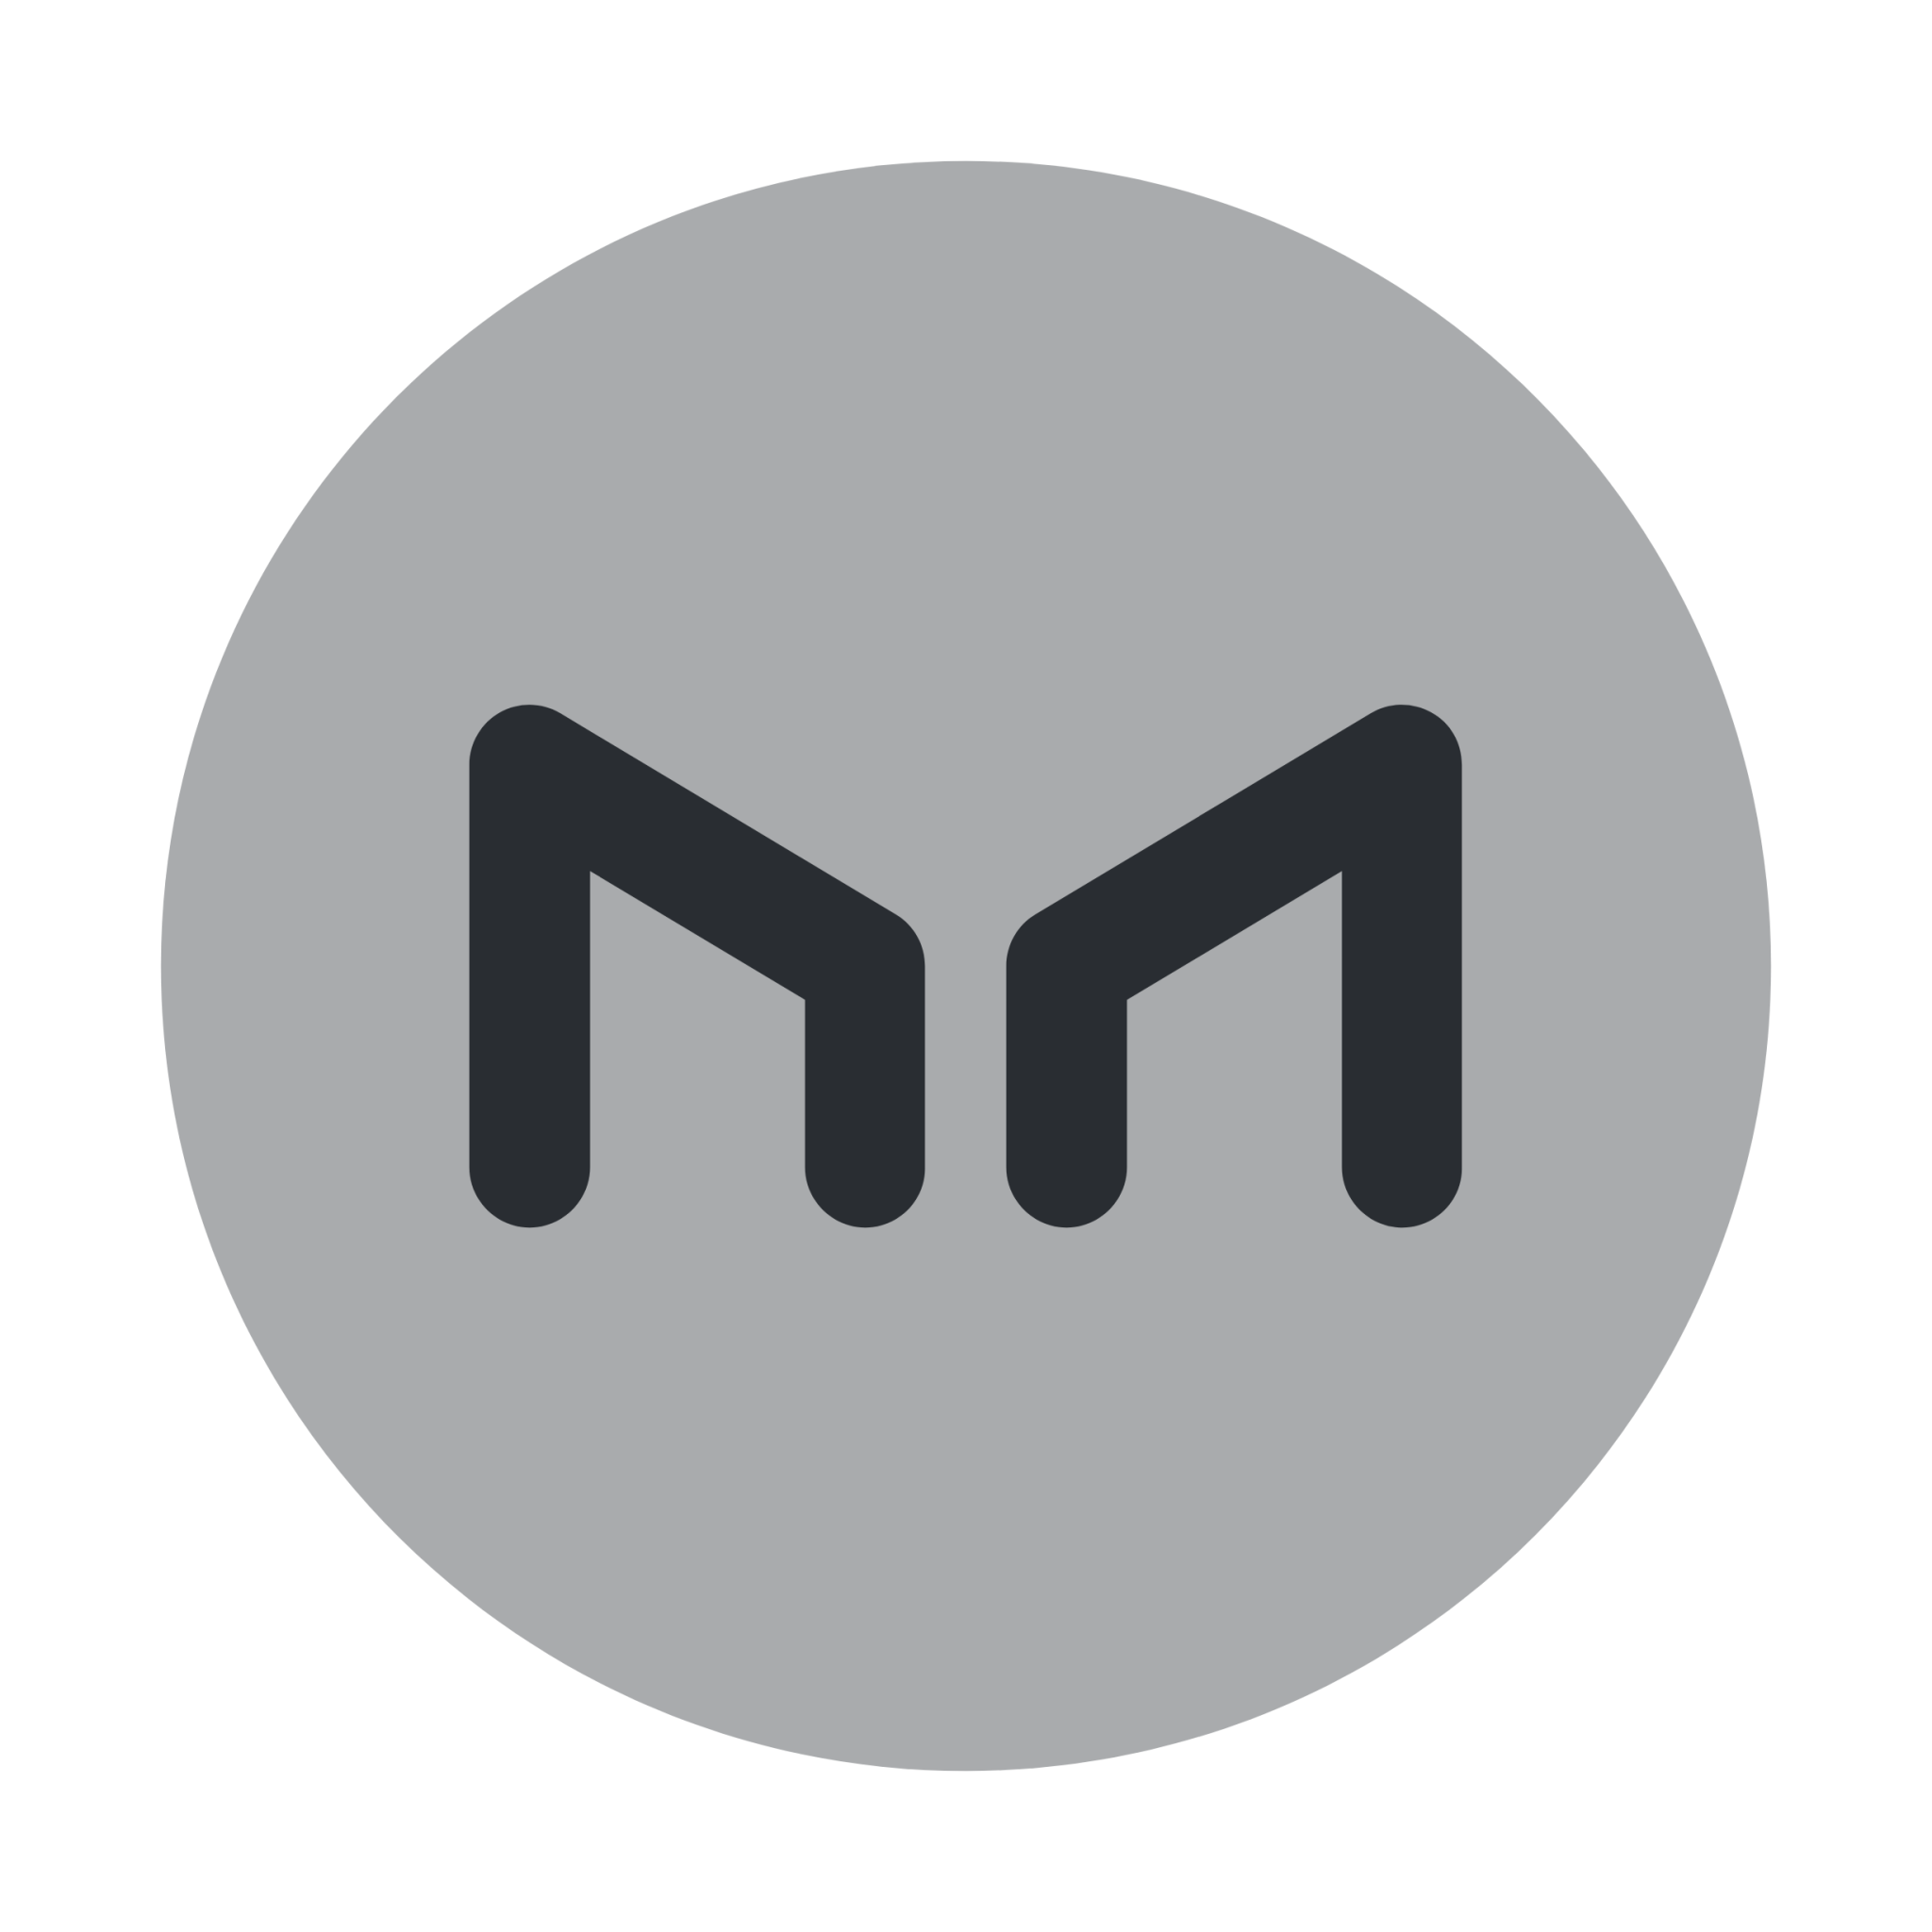 maker (mkr) icon